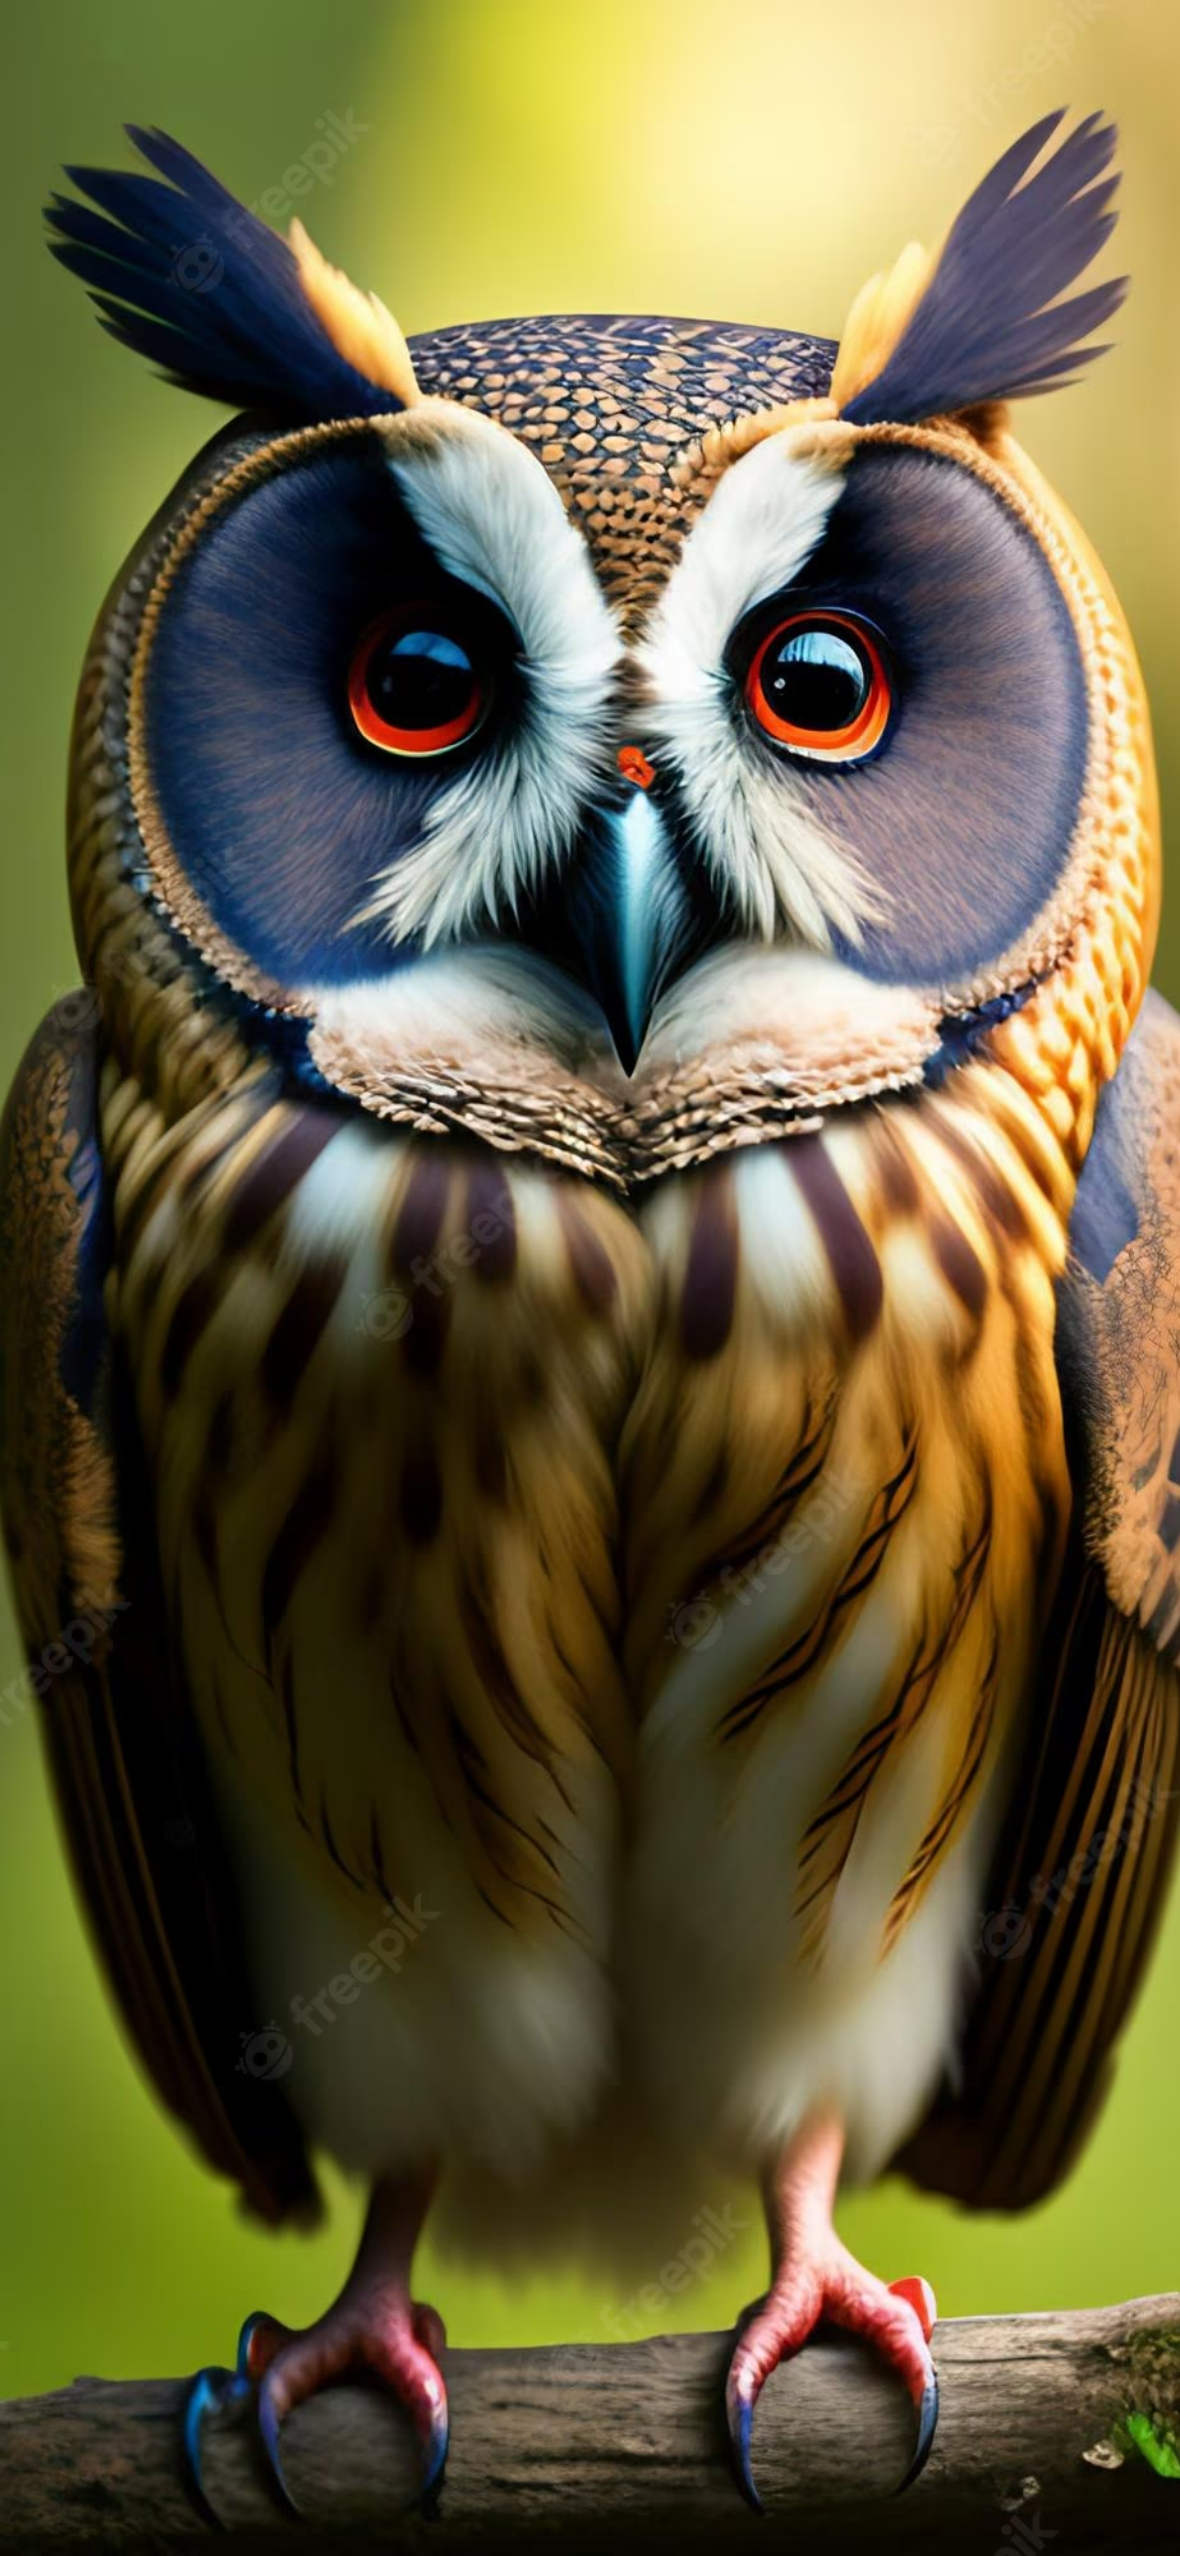 Owl Wallpaper iPhone X